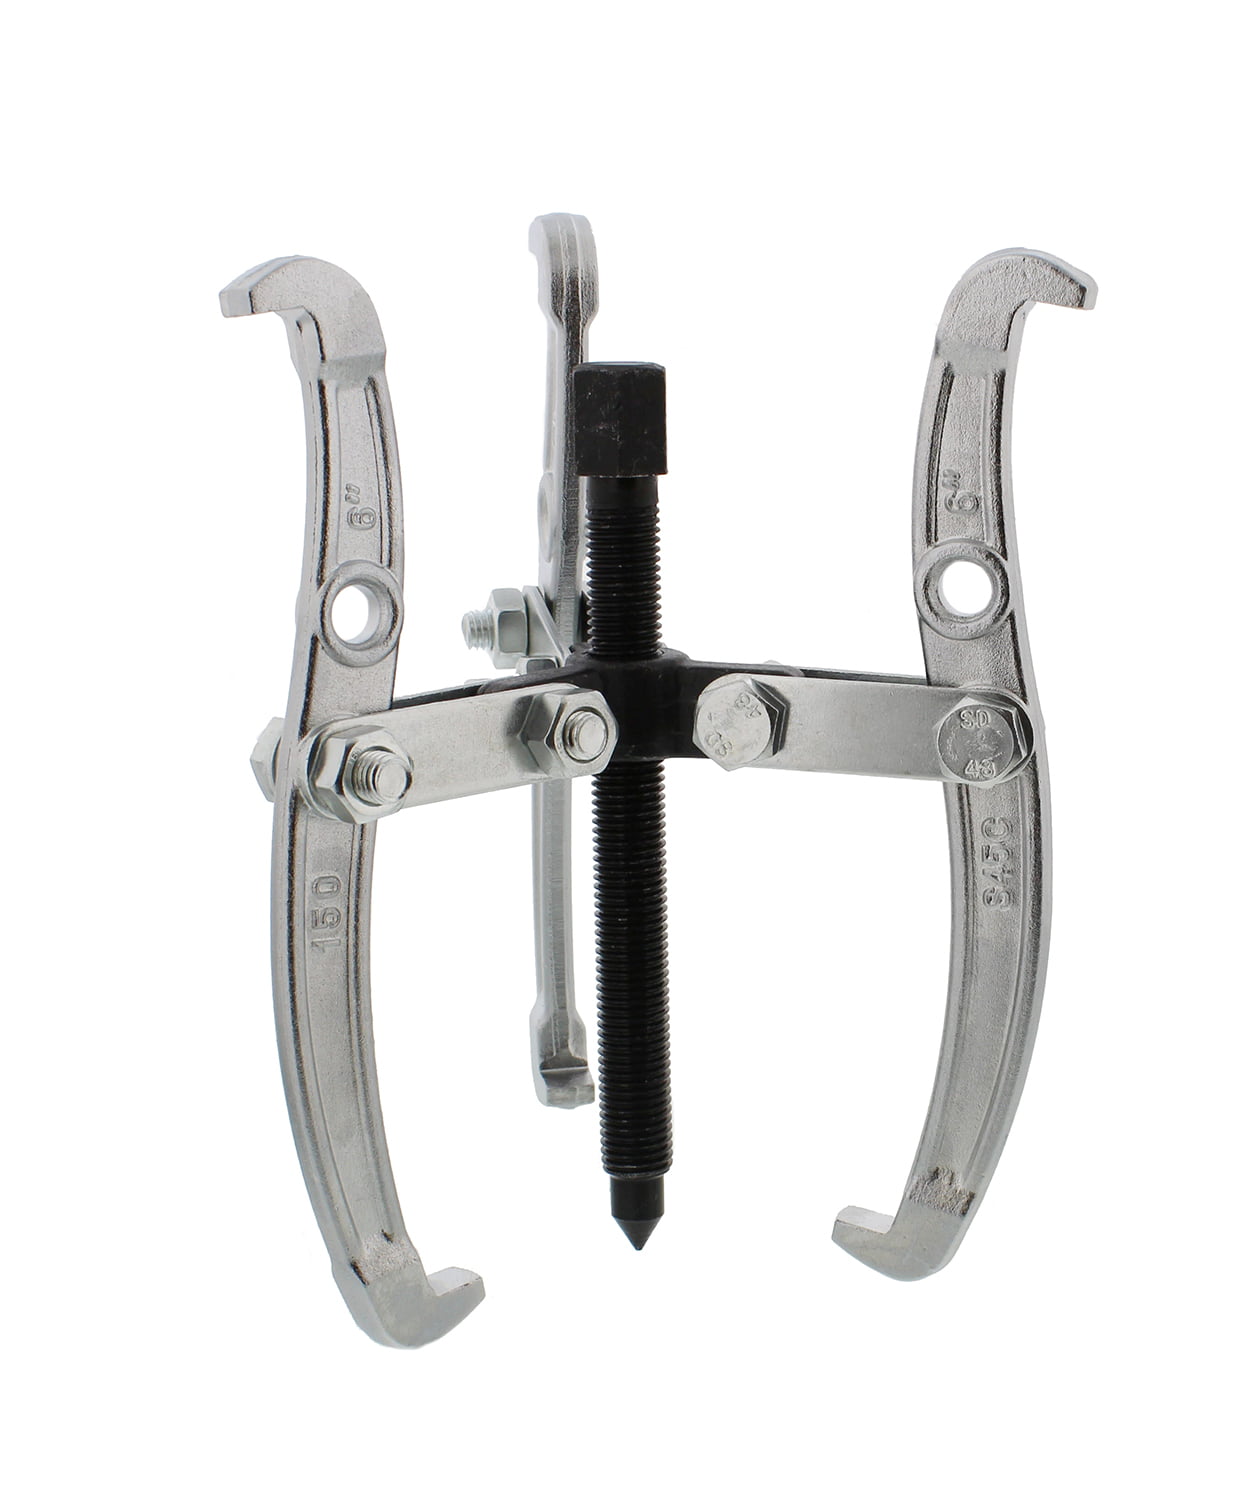 Qiilu 3 4 6 inch 3-Jaw Gear Puller Gear Removal Tool for Slide Gears Pulley and Flywheel Hub Bearing Puller 